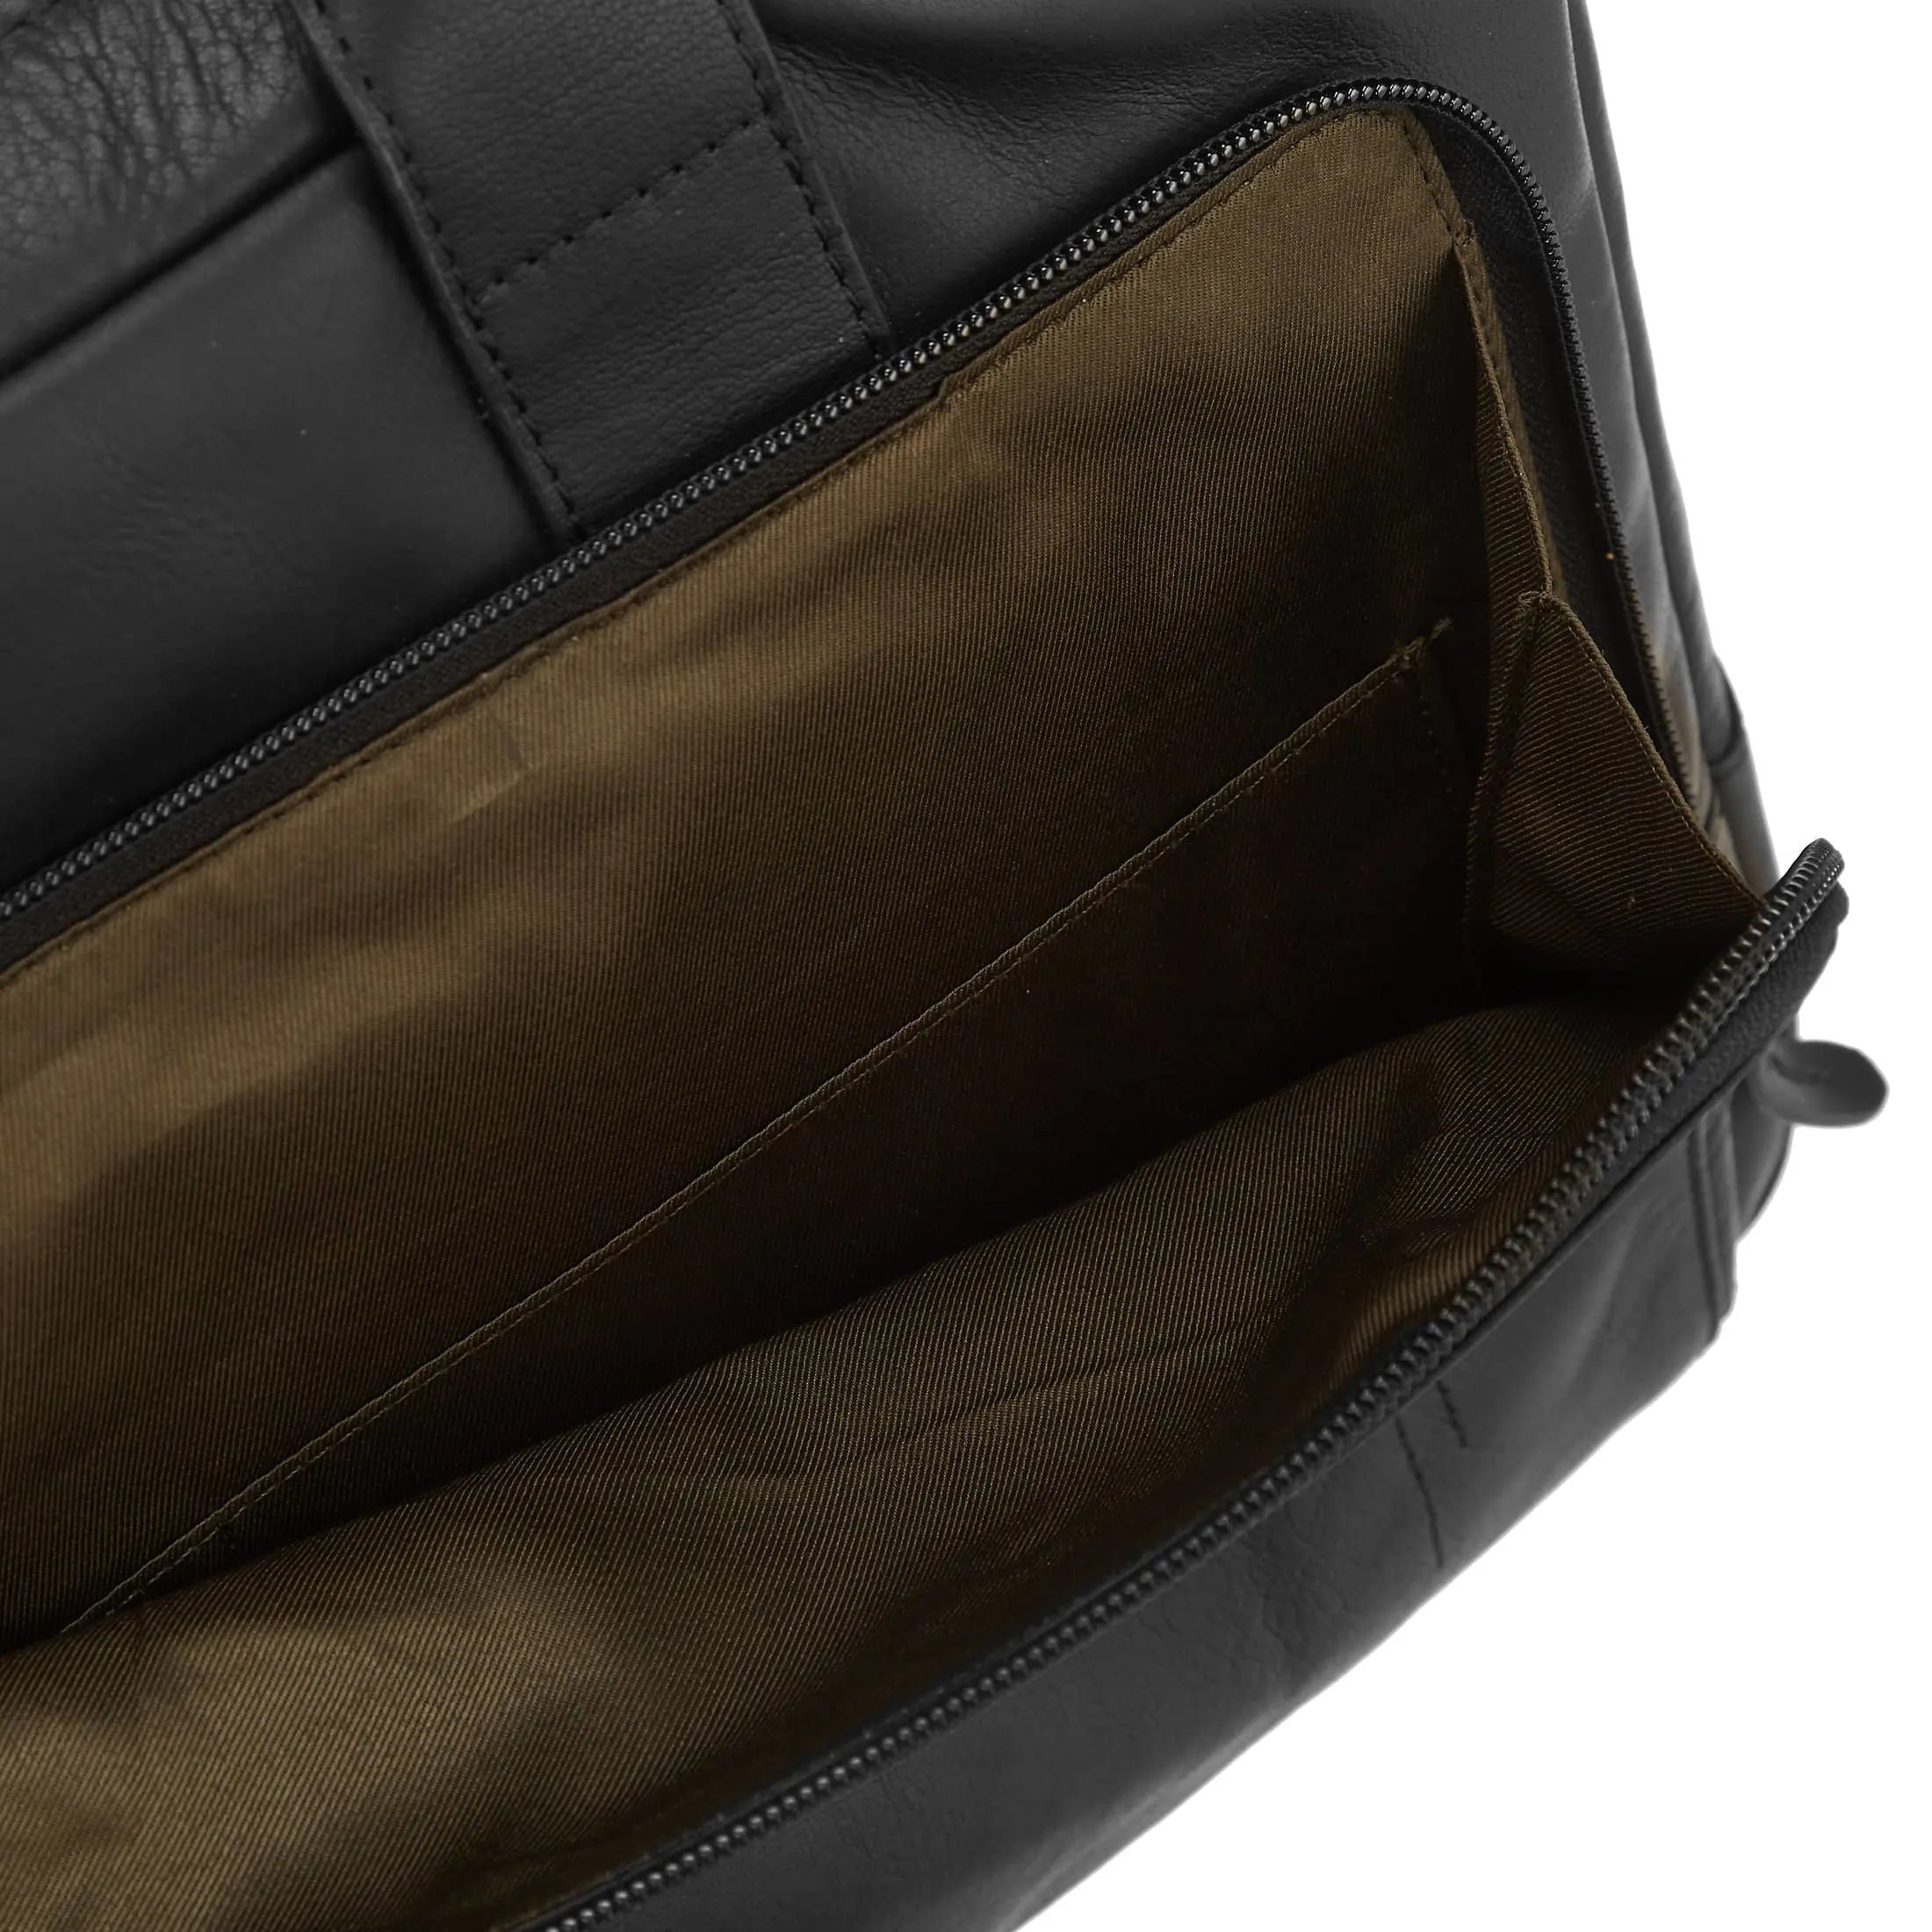 Strellson Hyde Park Briefbag SHZ 40 cm - black